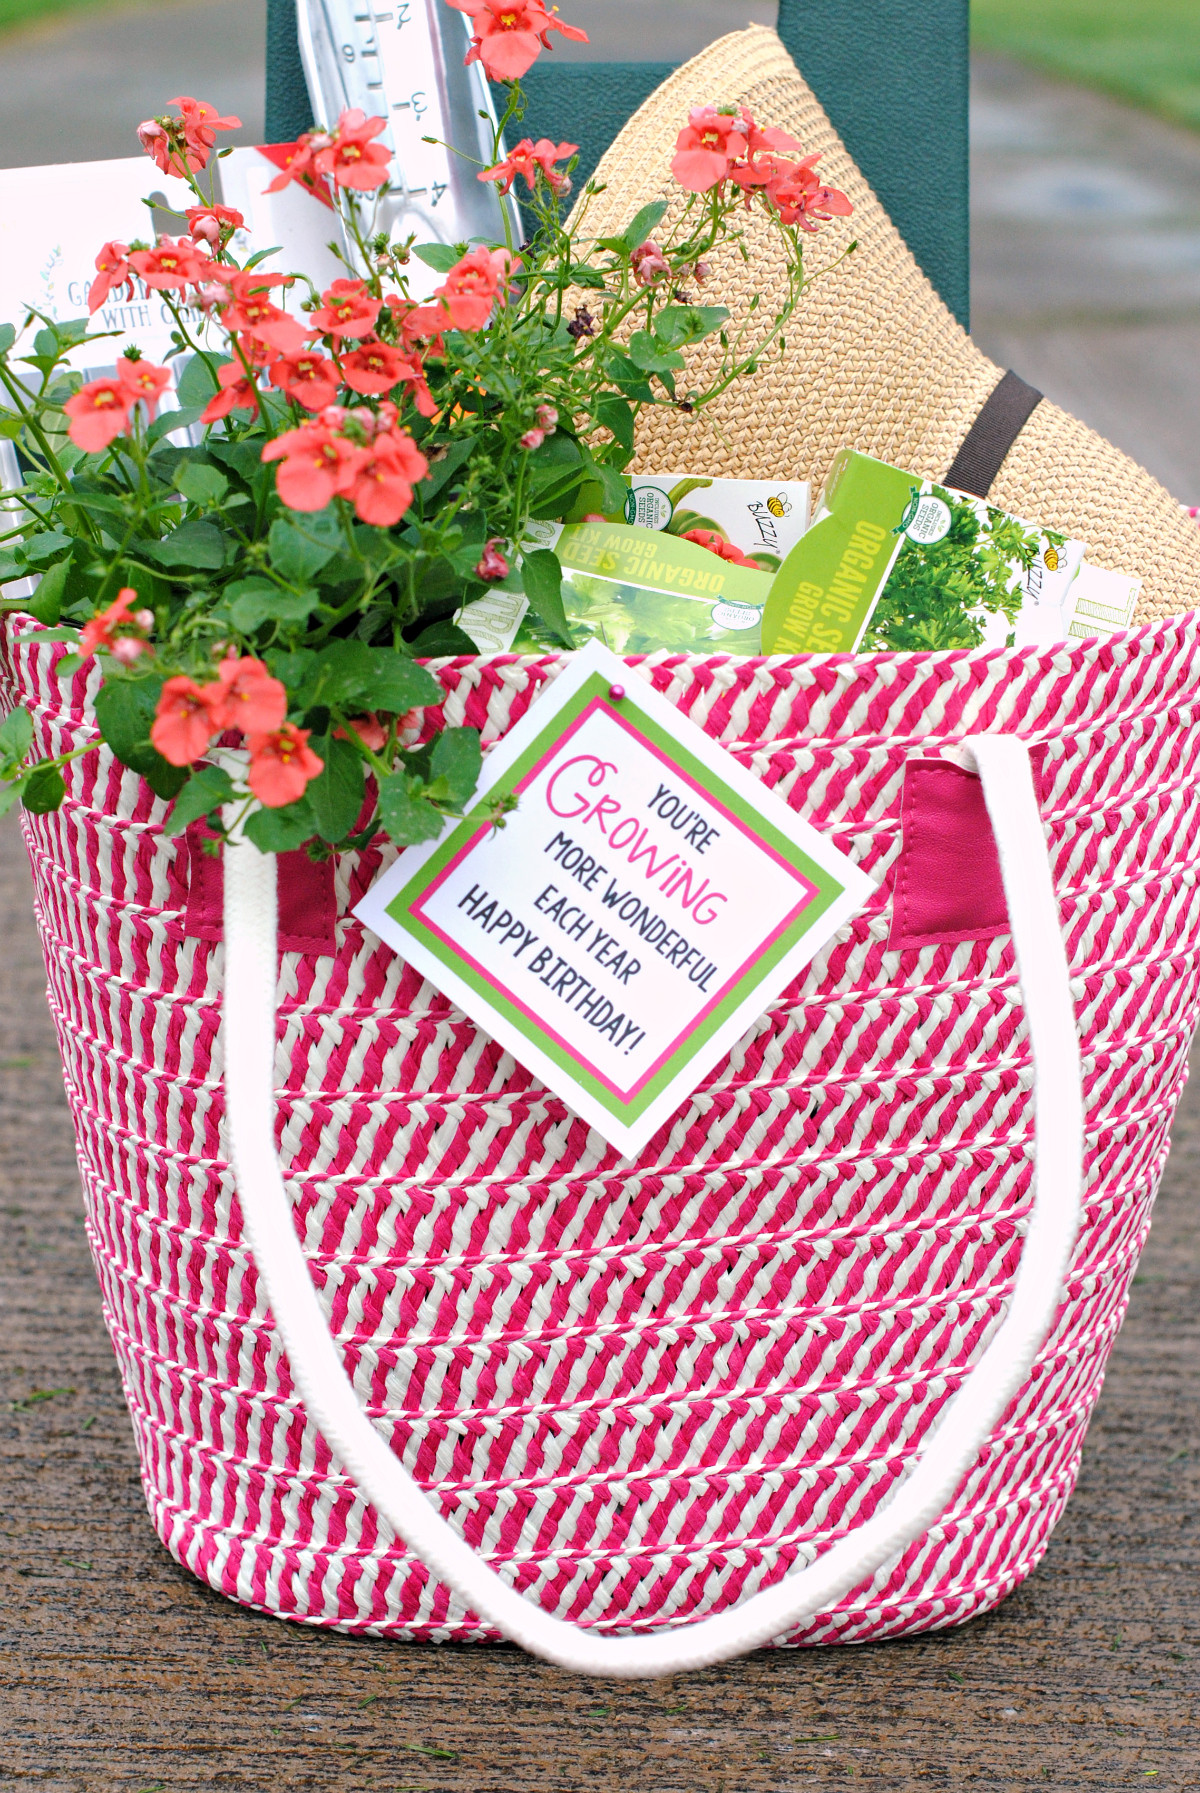 Garden Themed Gift Basket Ideas
 Fun Gardening Gift Basket Idea – Fun Squared